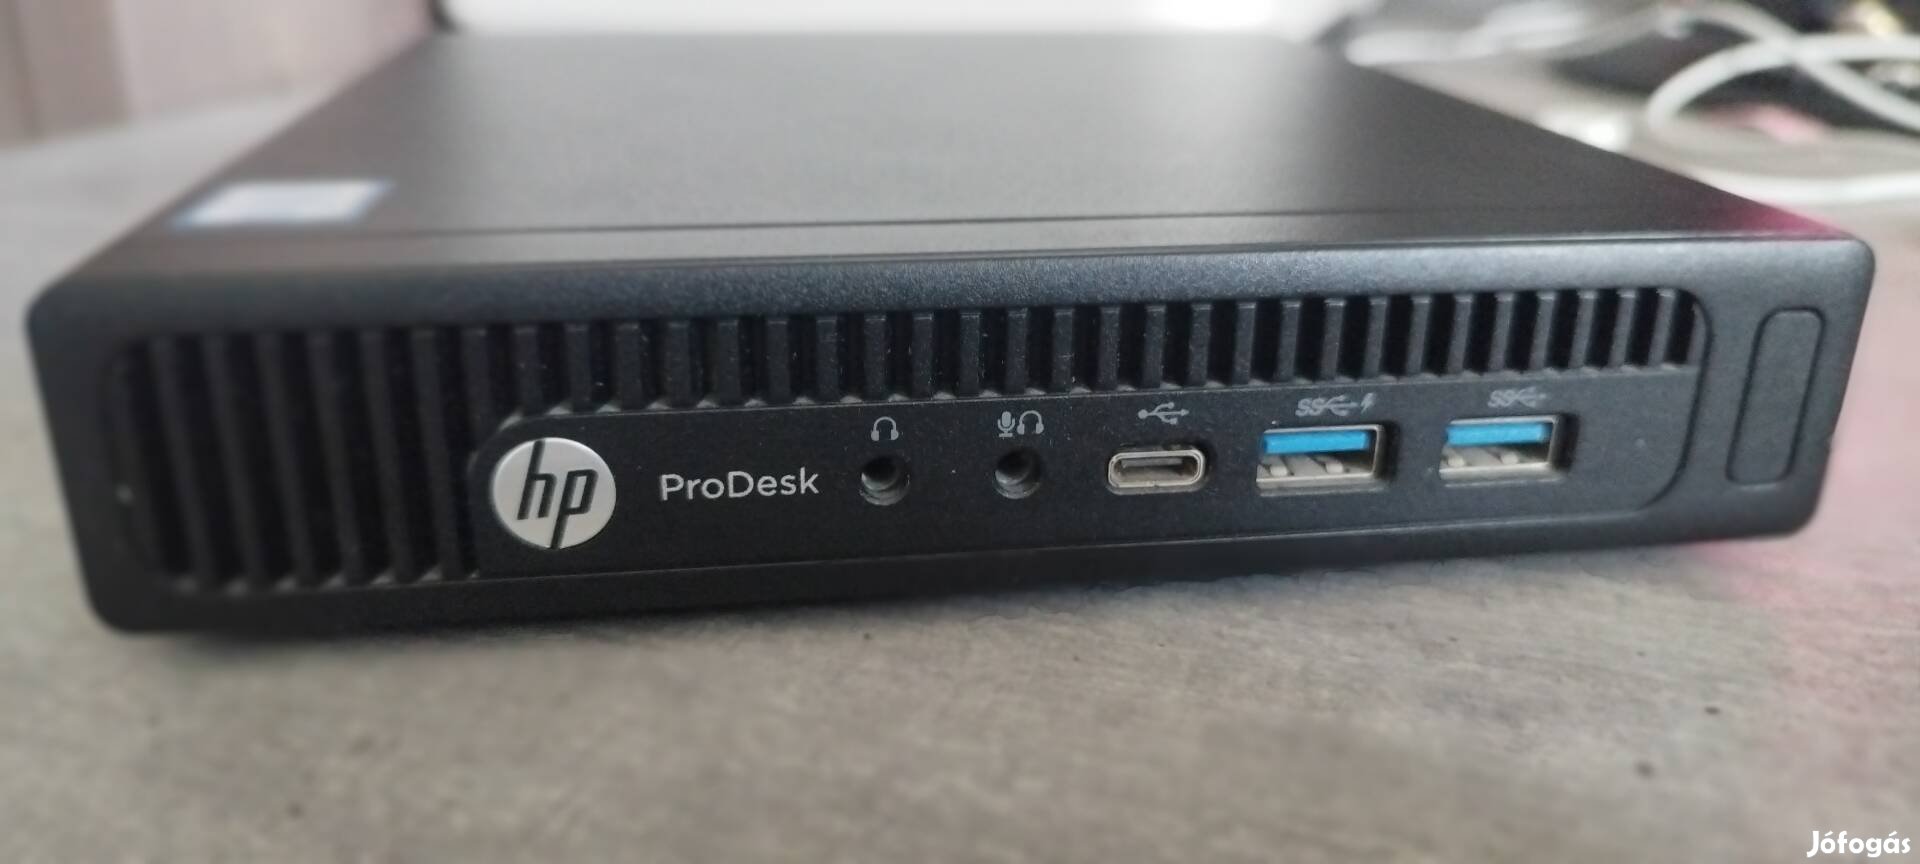 HP Prodesk 600 G2 Desktop Mini